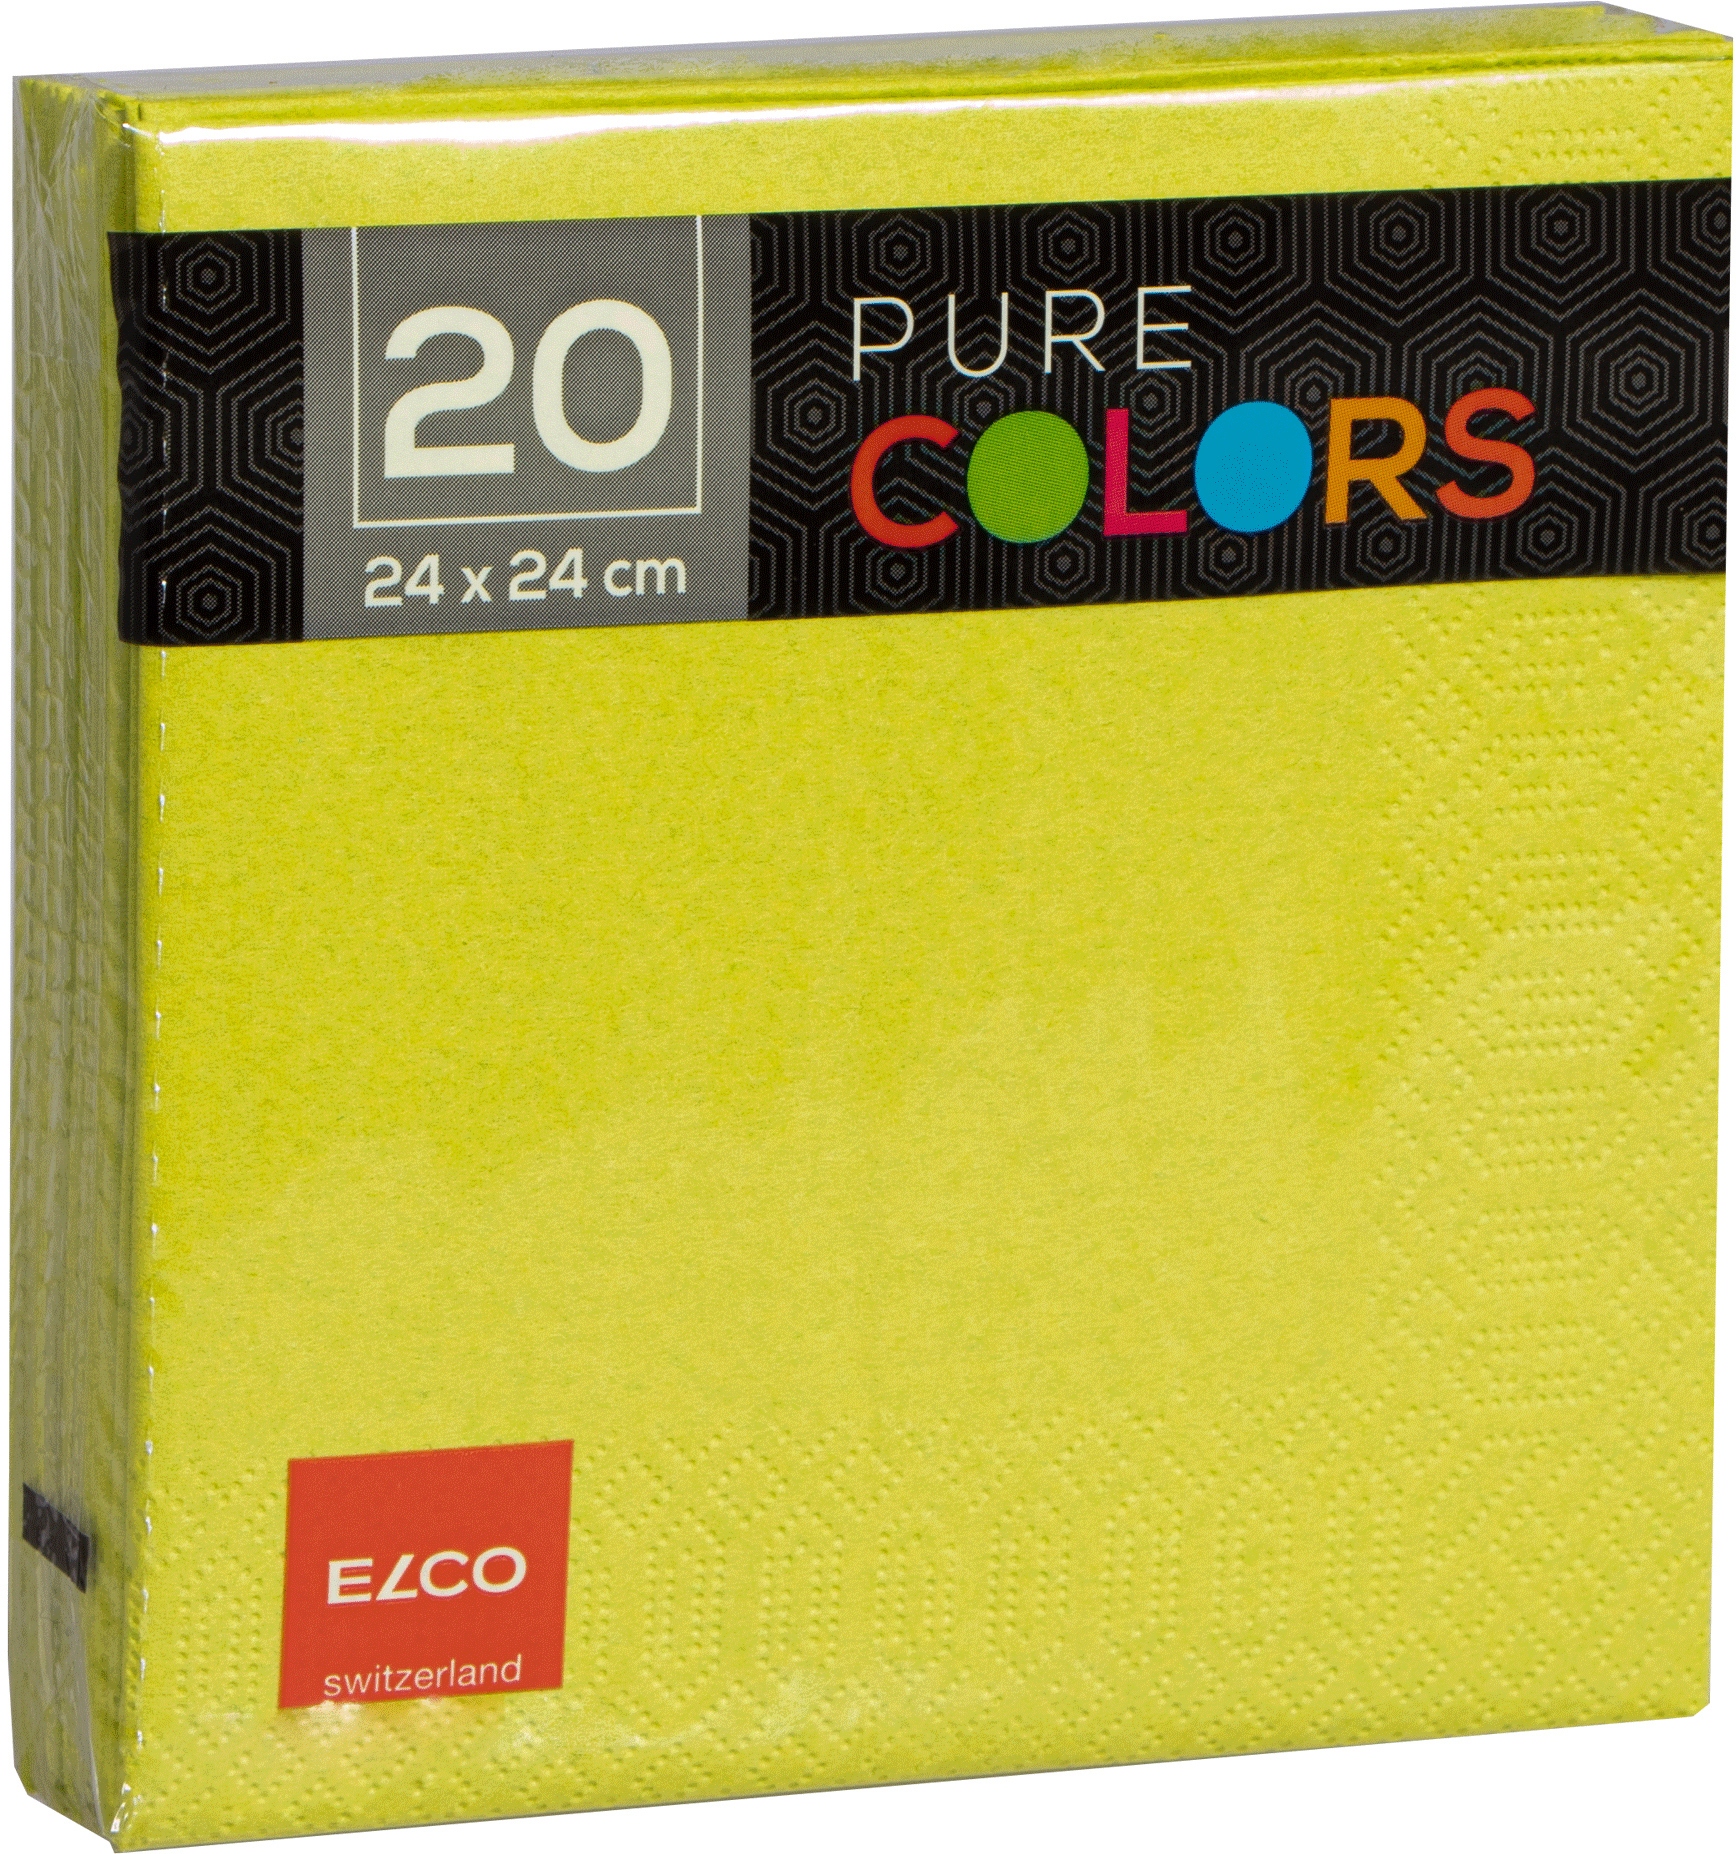 ELCO Serviettes tissue 24x24cm PC234020-213 3 plis, kiwi 20pcs. 3 plis, kiwi 20pcs.